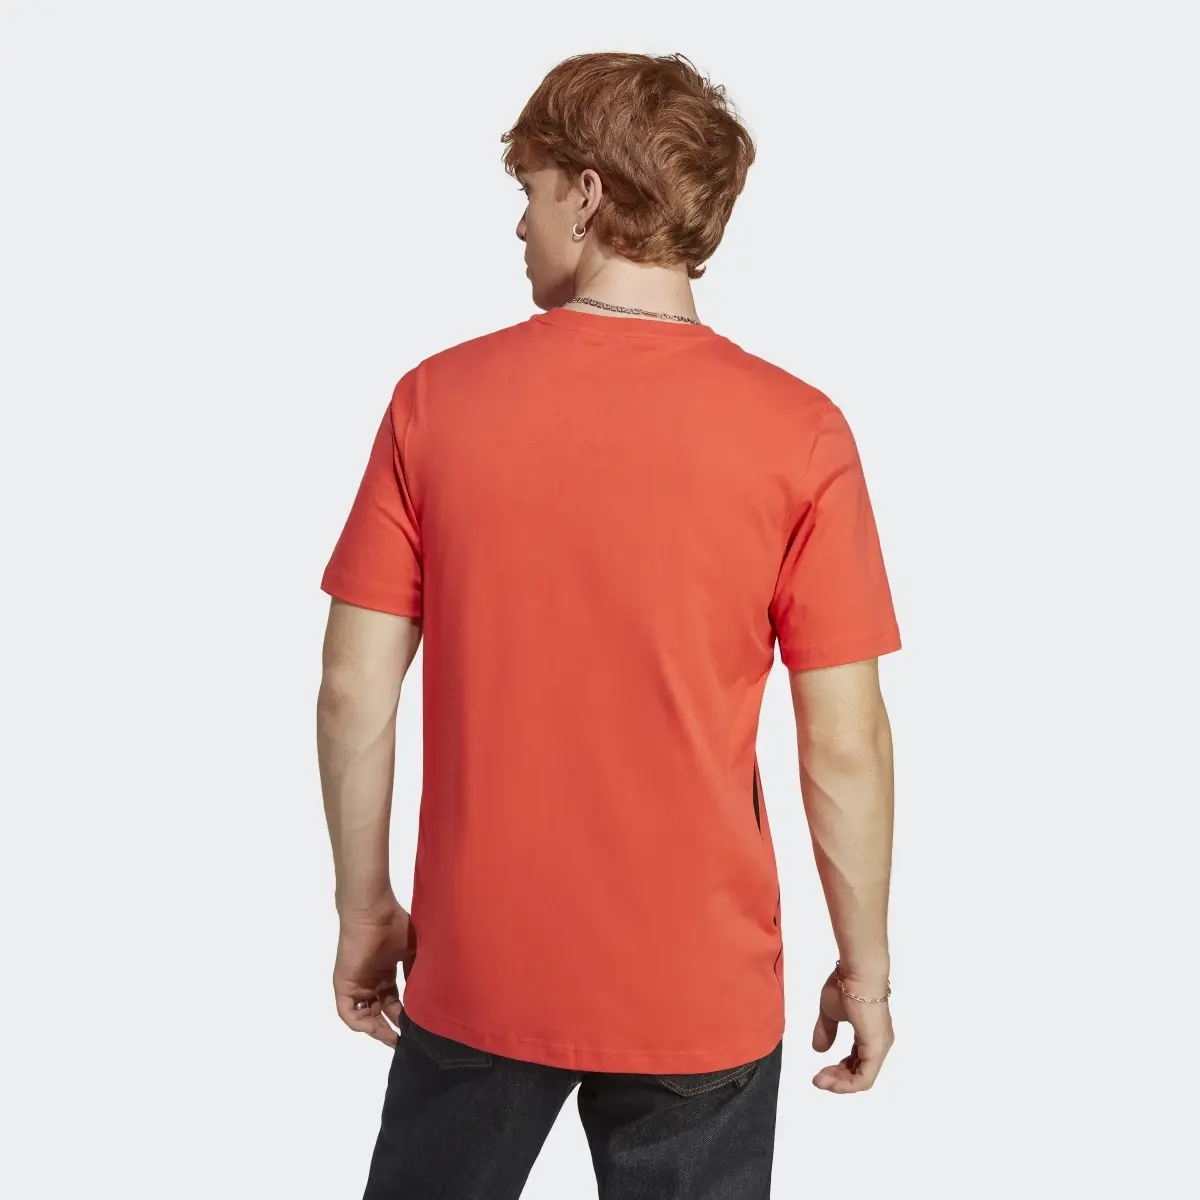 Adidas T-shirt Colourblock. 3